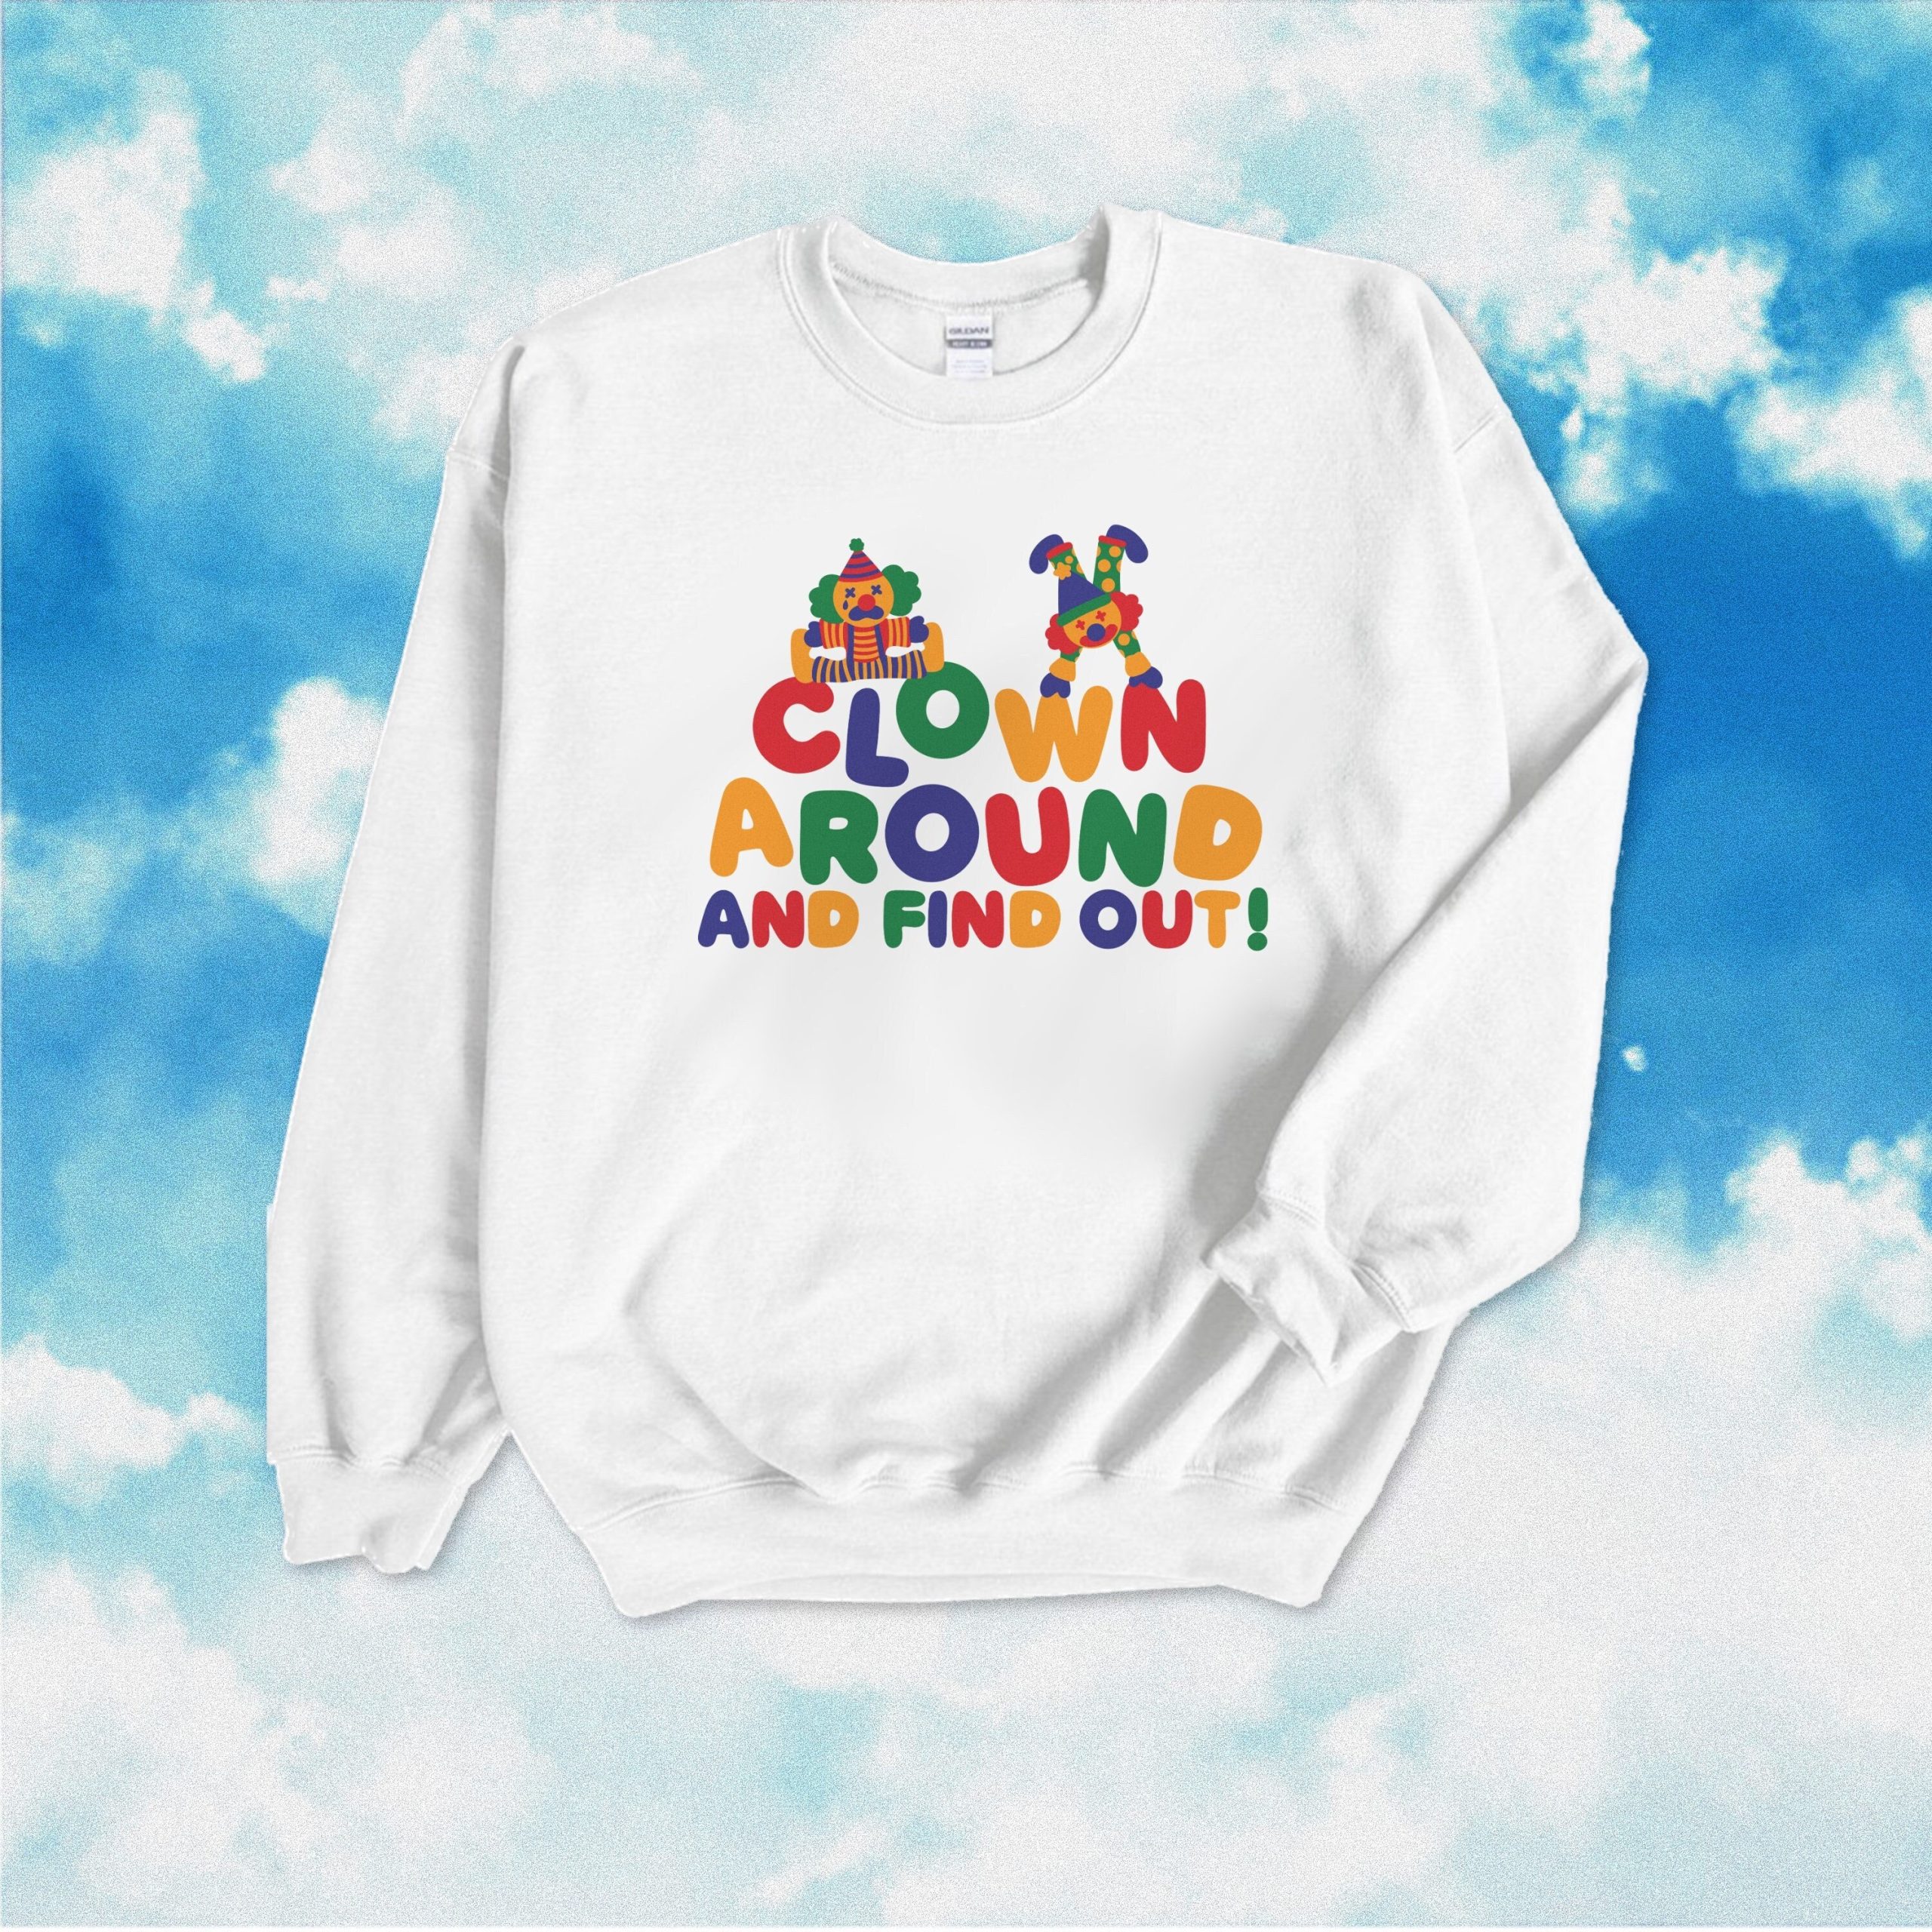 Clown Crewneck Sweatshirt - Y2K Clowncore Clothing for Her or Him